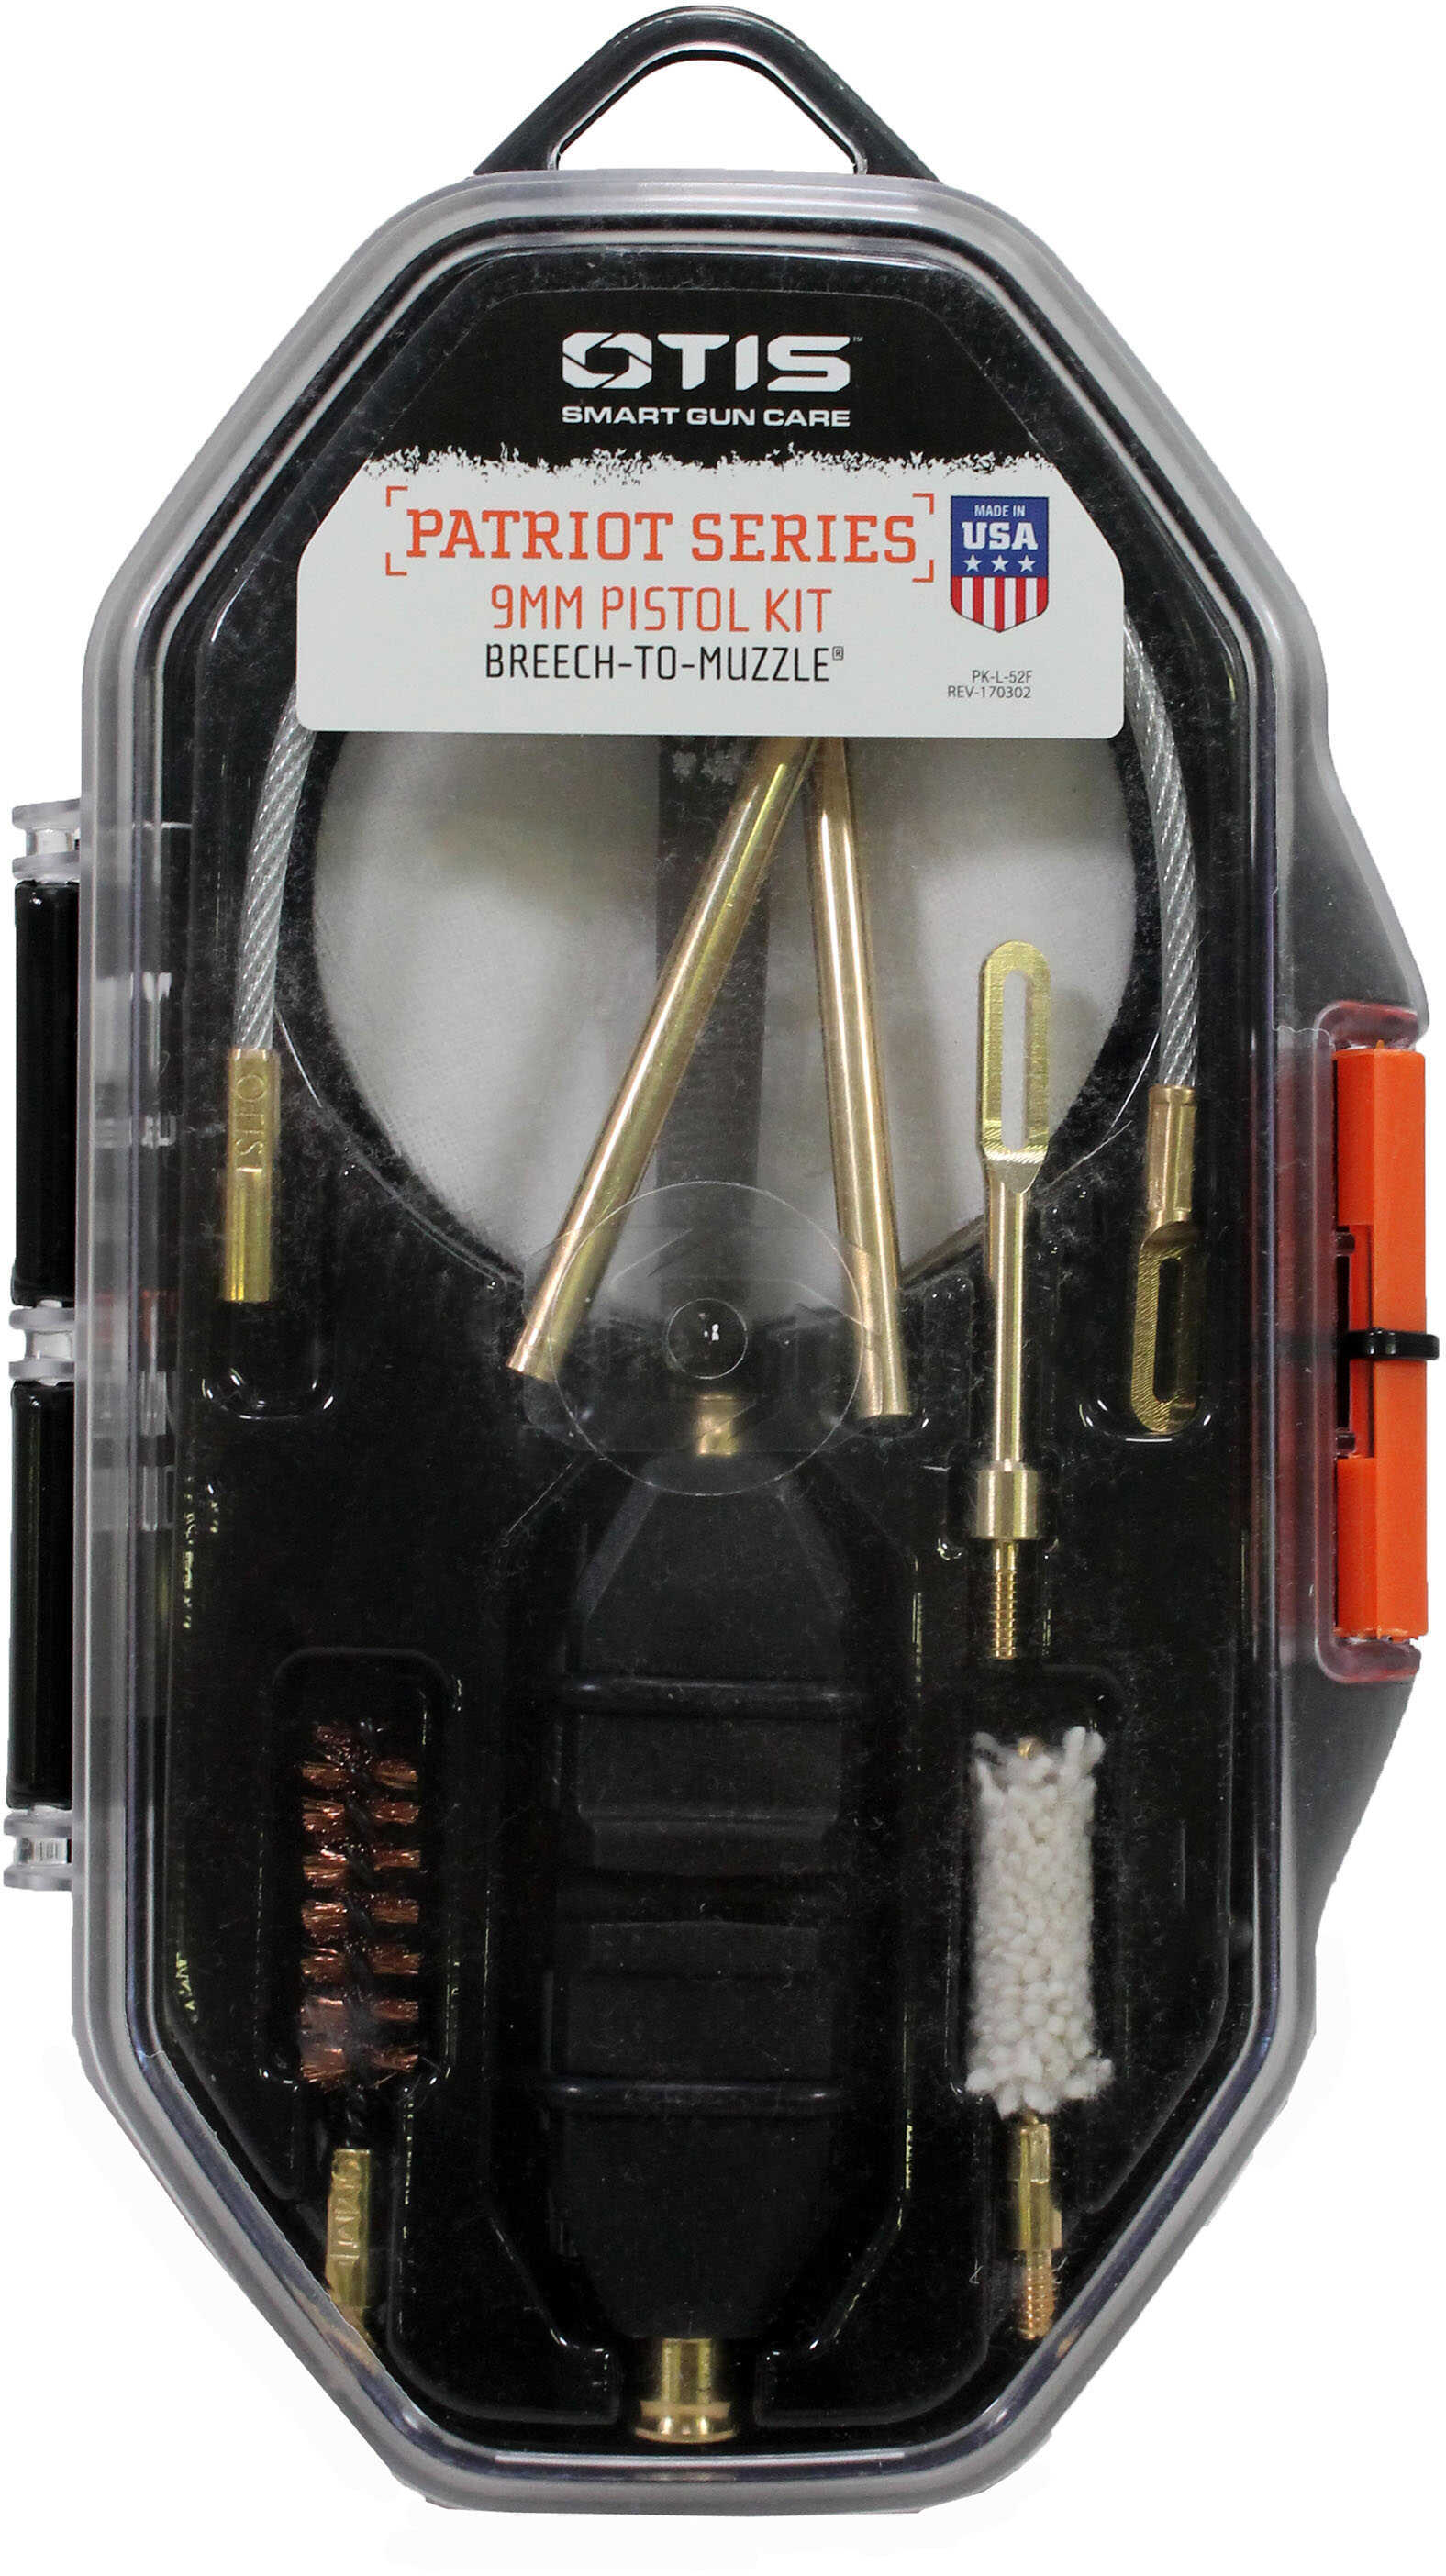 Patriot Series Pistol Kit